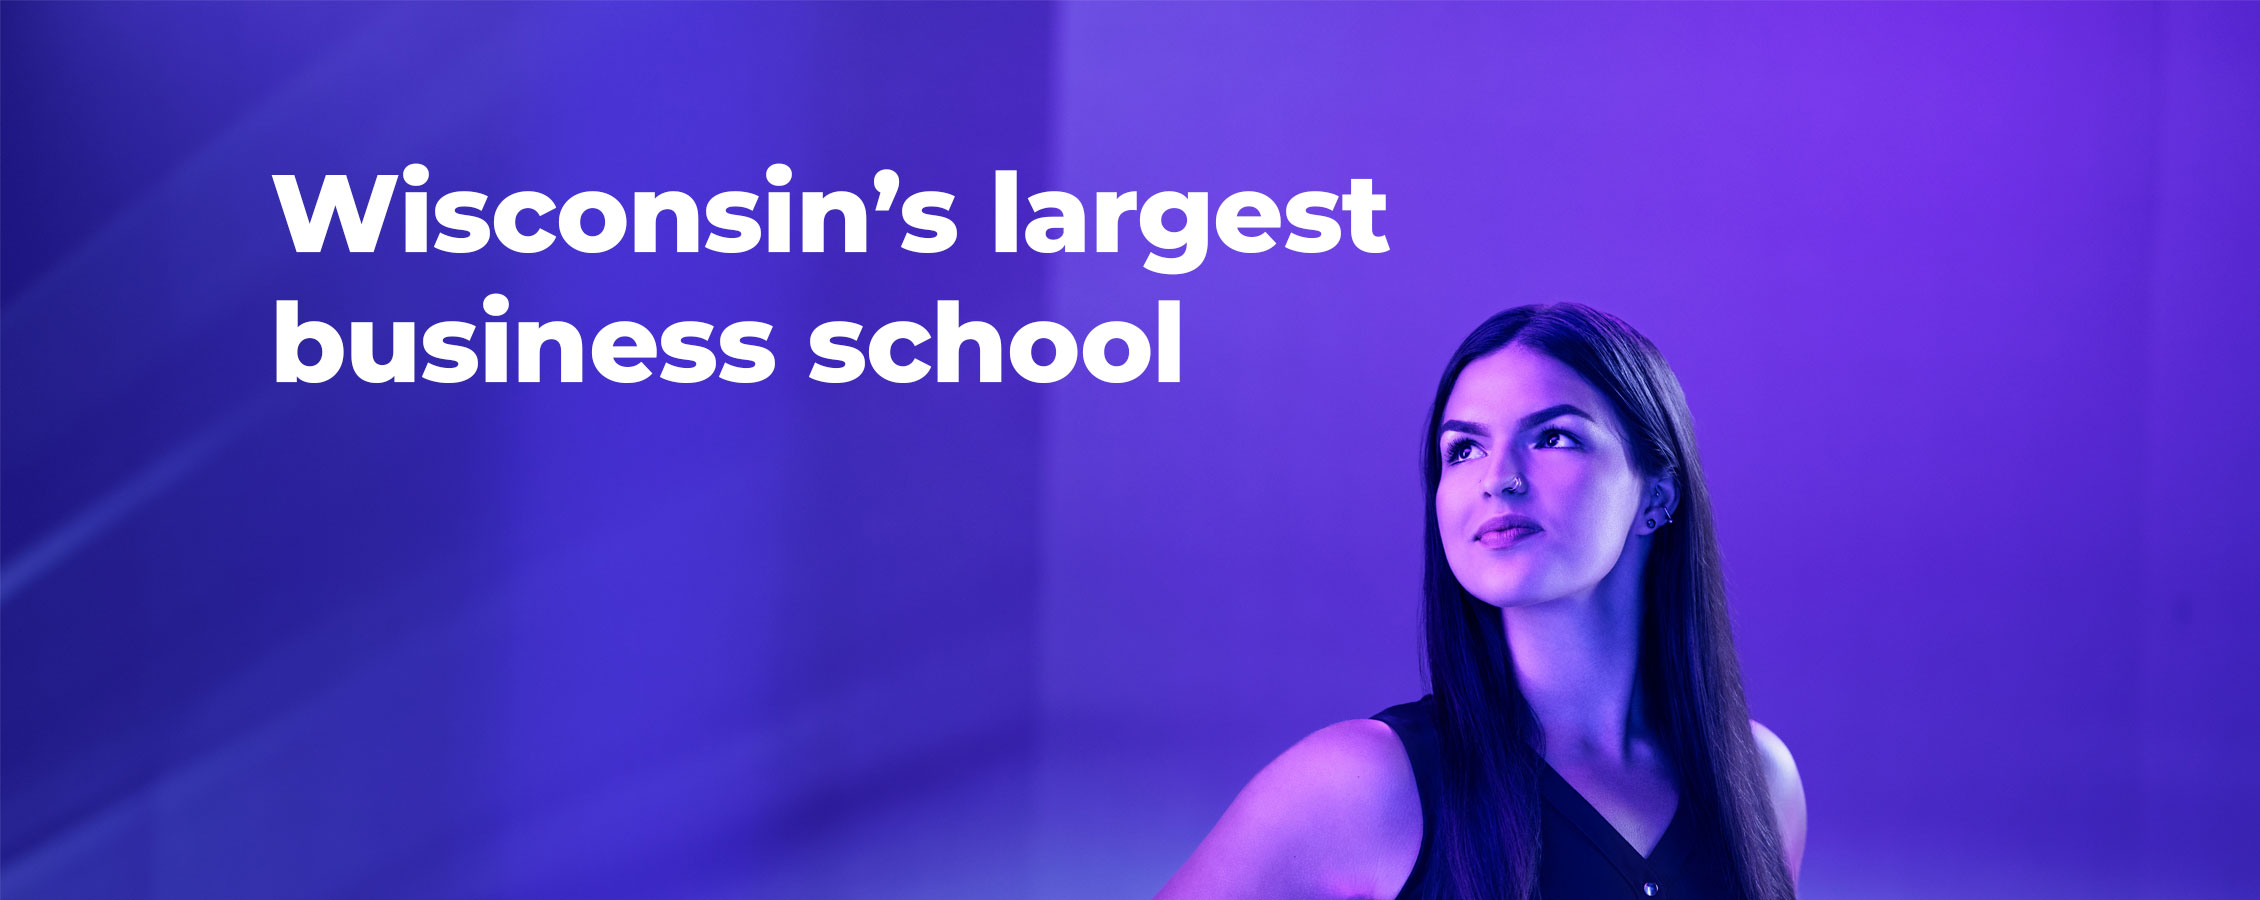 Wisconsin's largest business school.